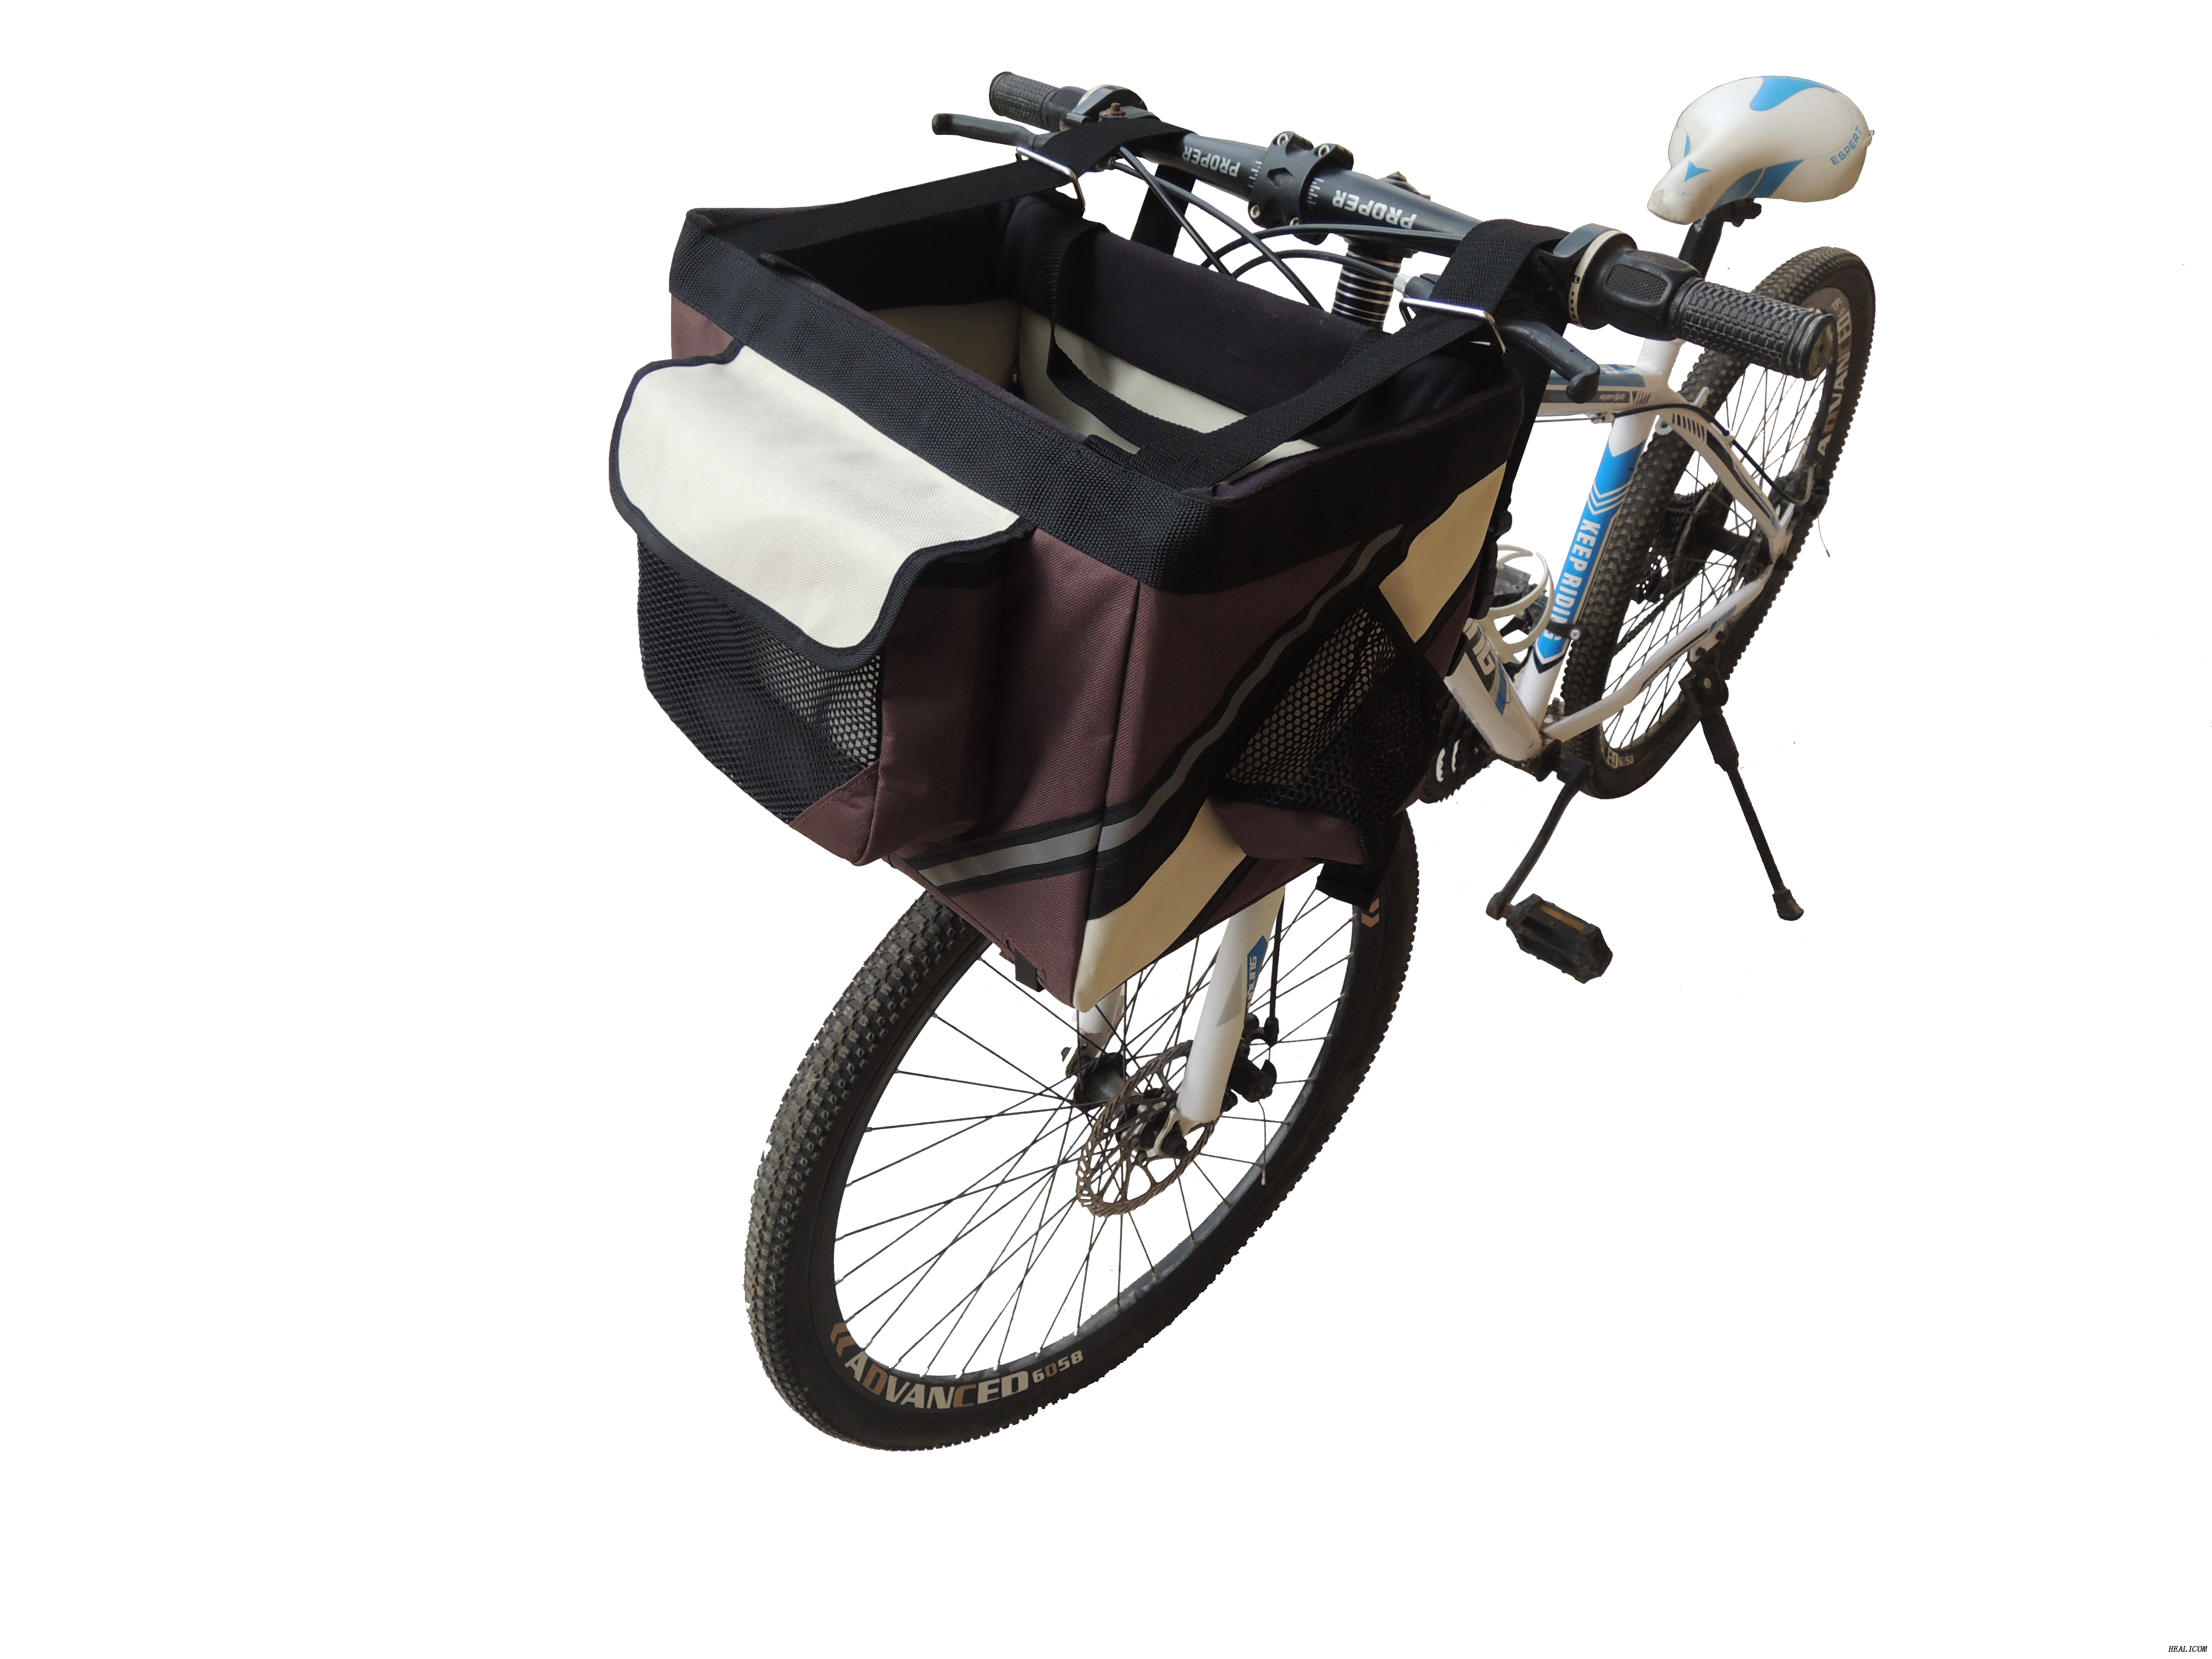 TPC0007 High quality Portable Pet bike baskets for dog cat bike pet carrier bag